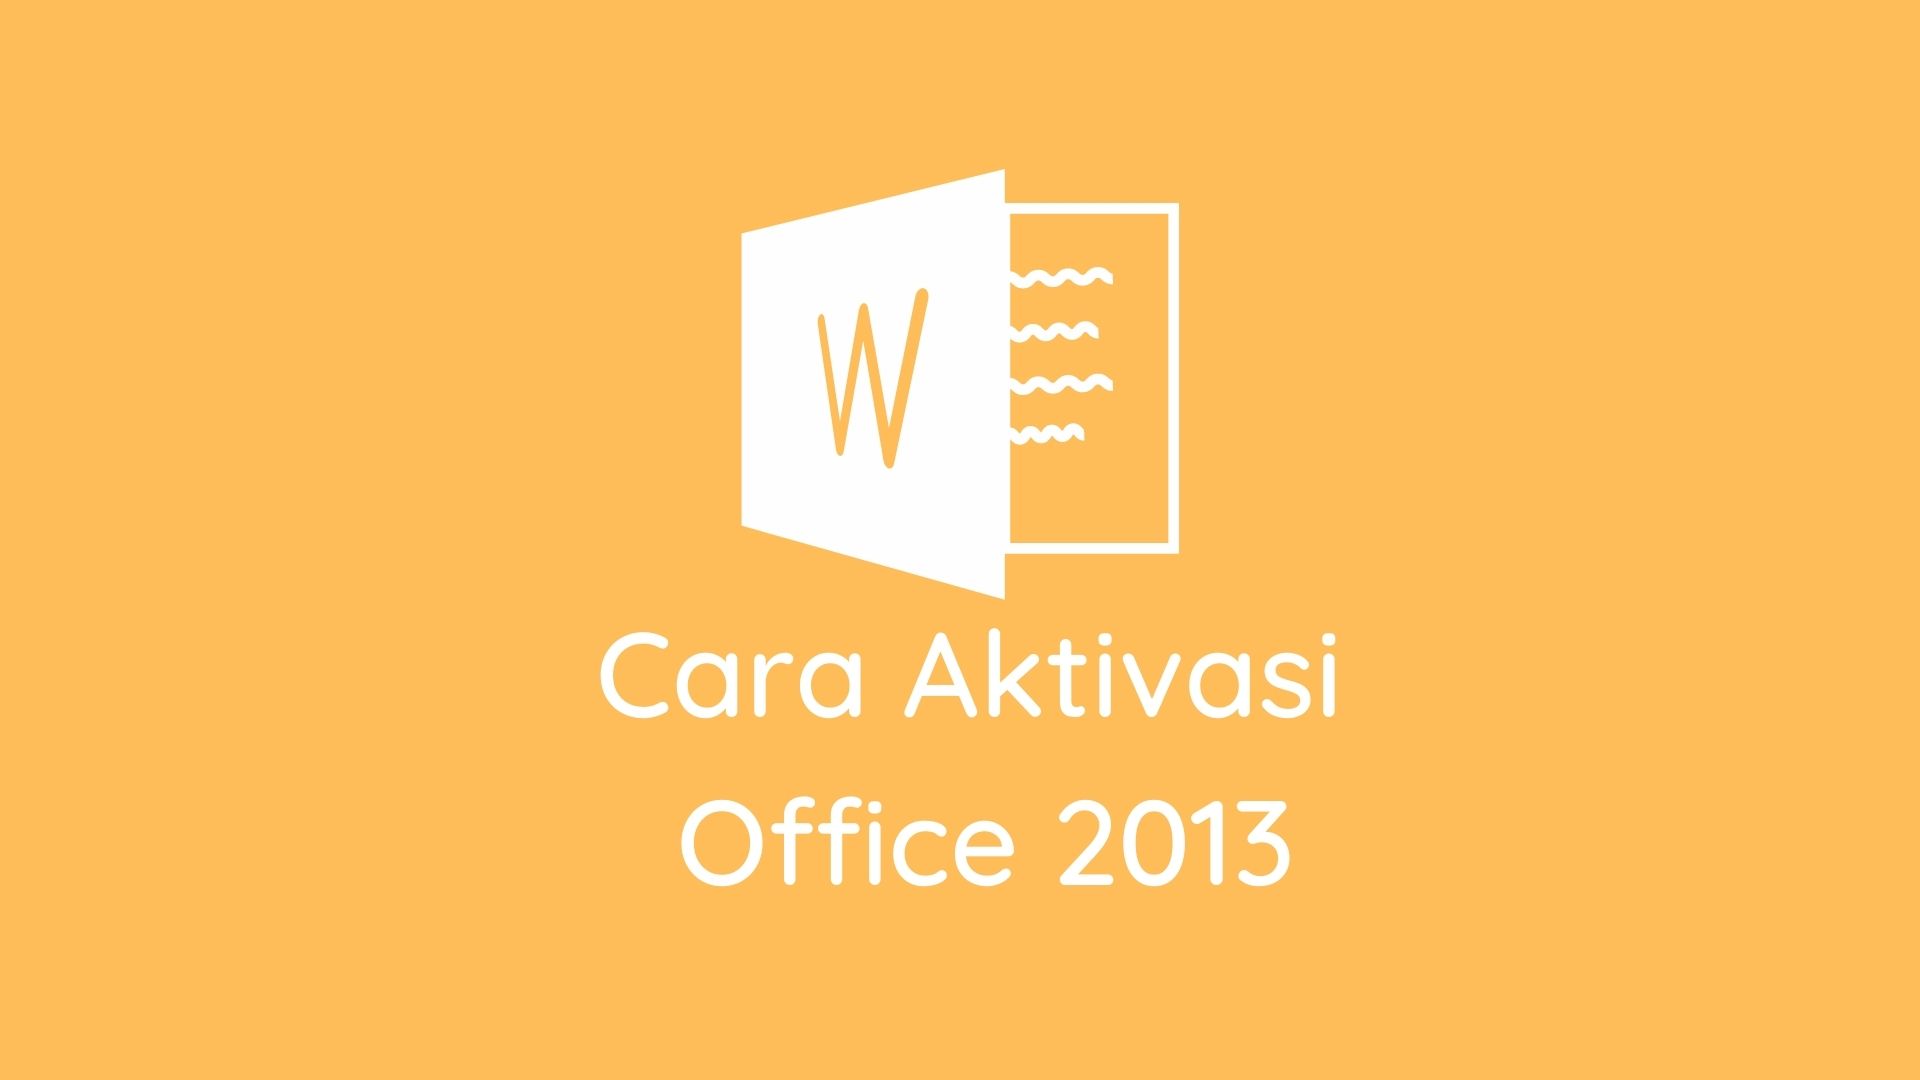 Aktivasi Office 2013